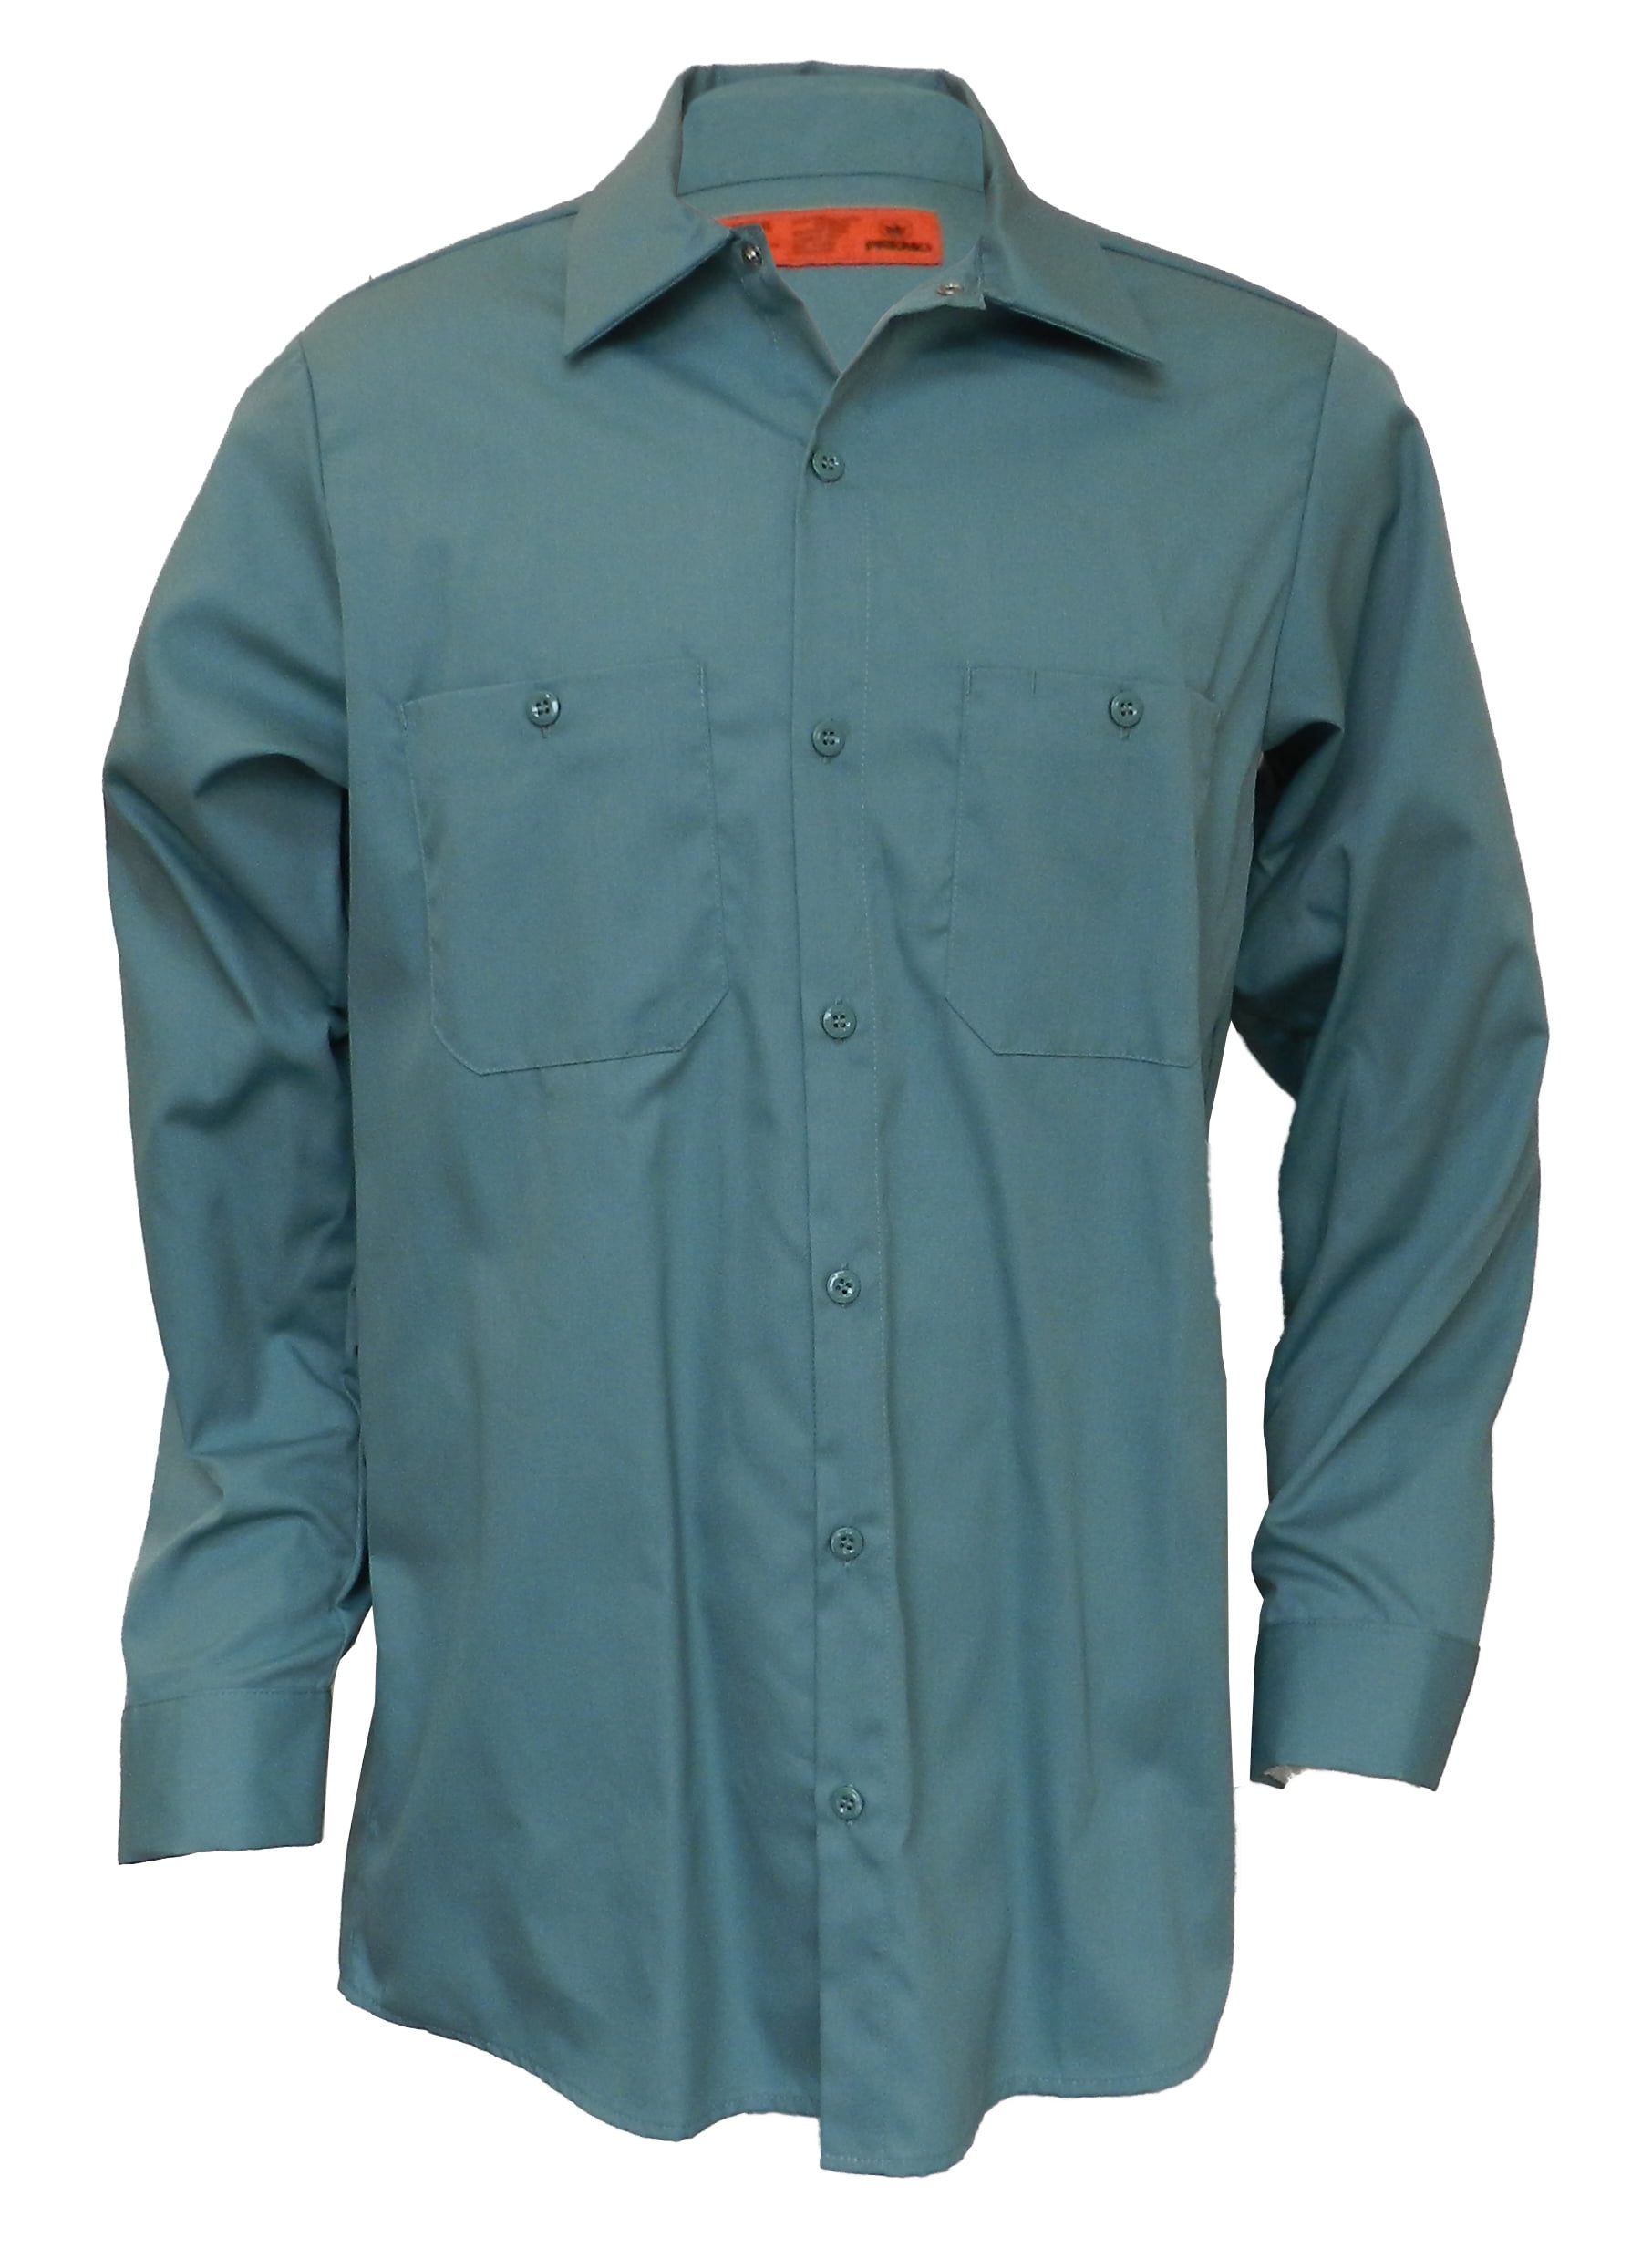 Solar 1 Clothing Industrial Long Sleeve Work Shirt MS14 - Walmart.com